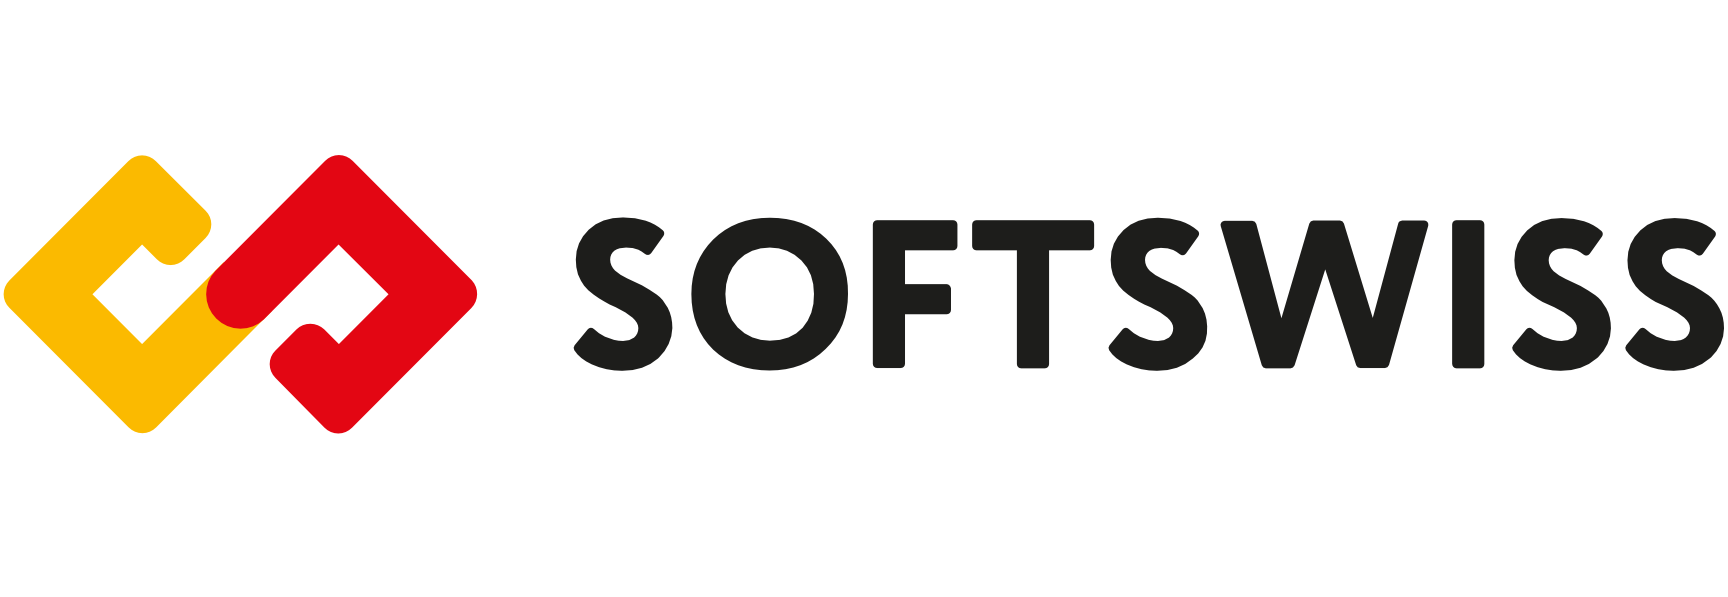 SOFTSWISS / N1 Aggregator Ltd